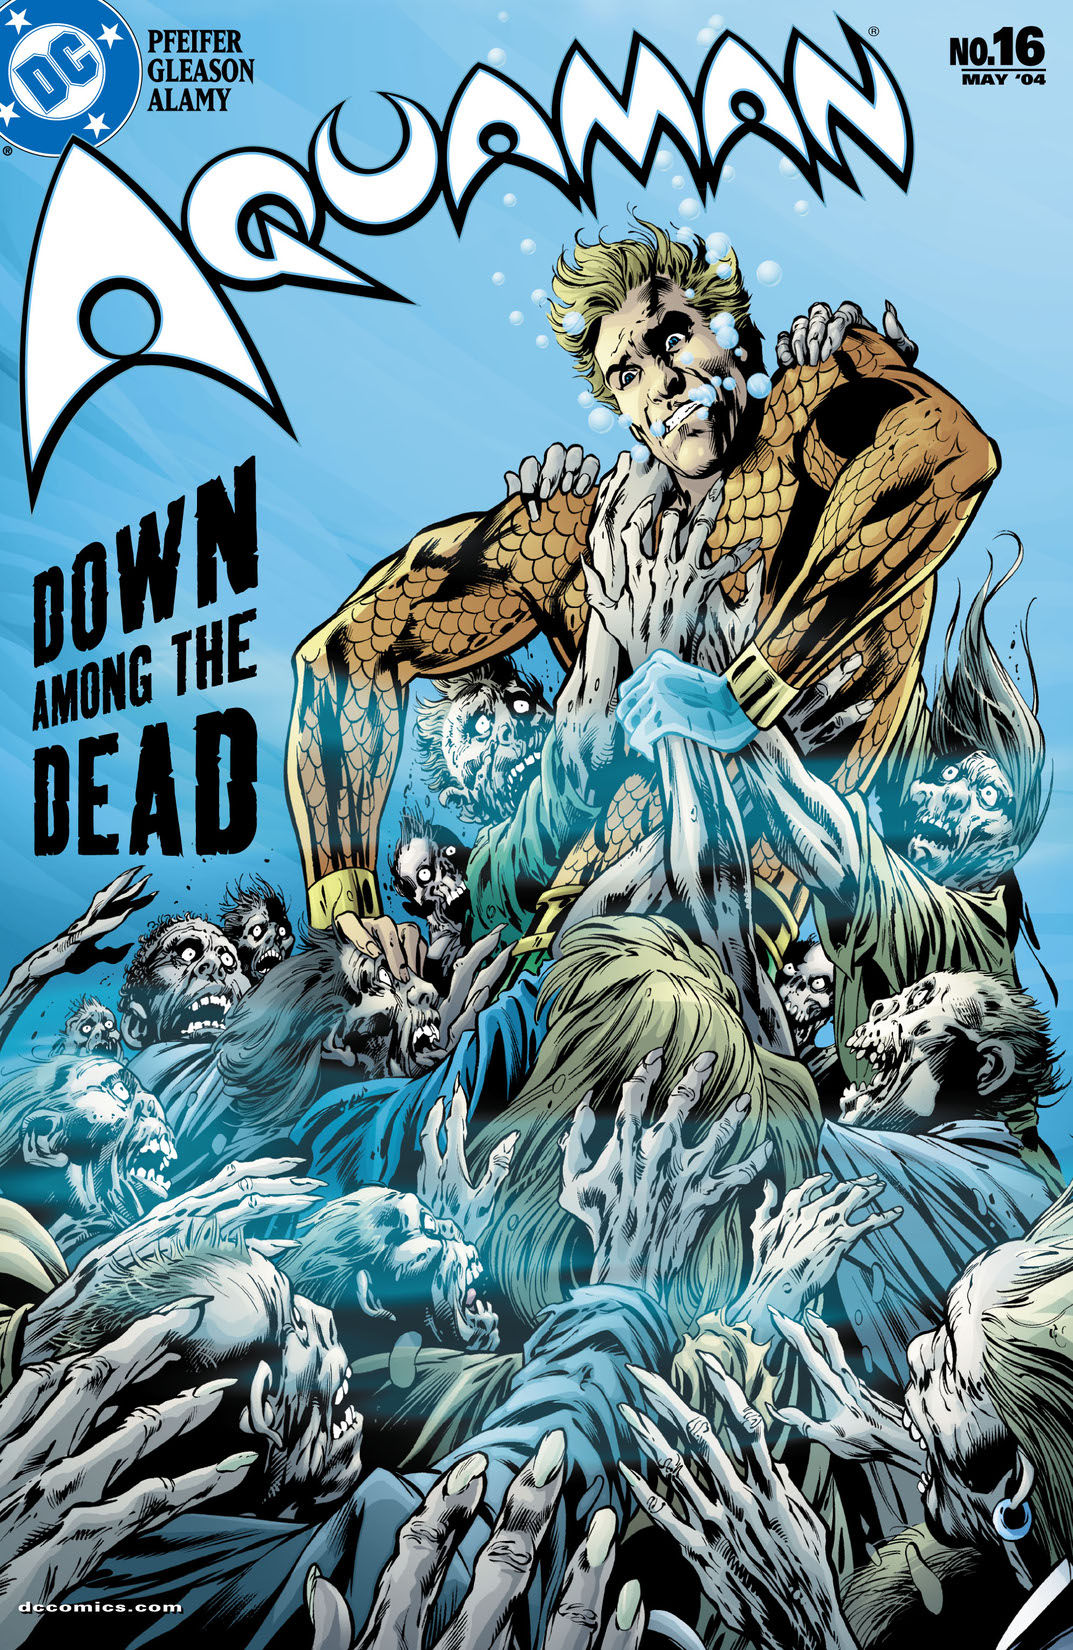 Aquaman (2002-) #16 preview images